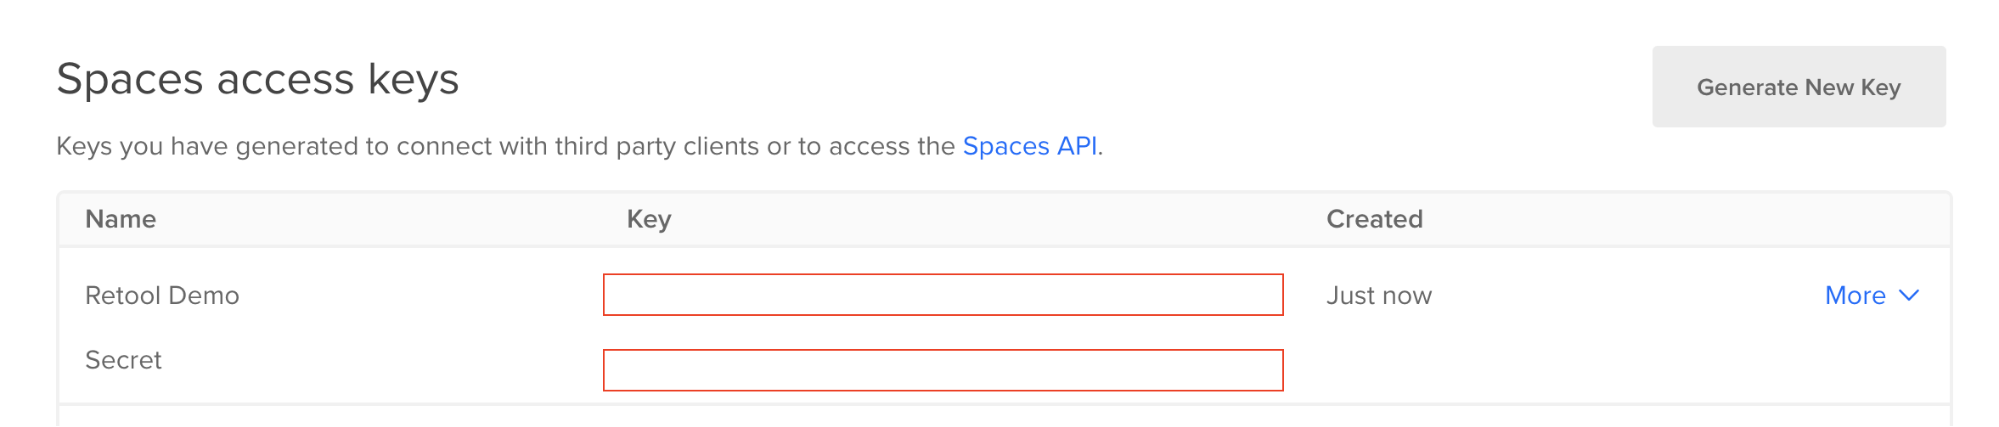 spaces access keys